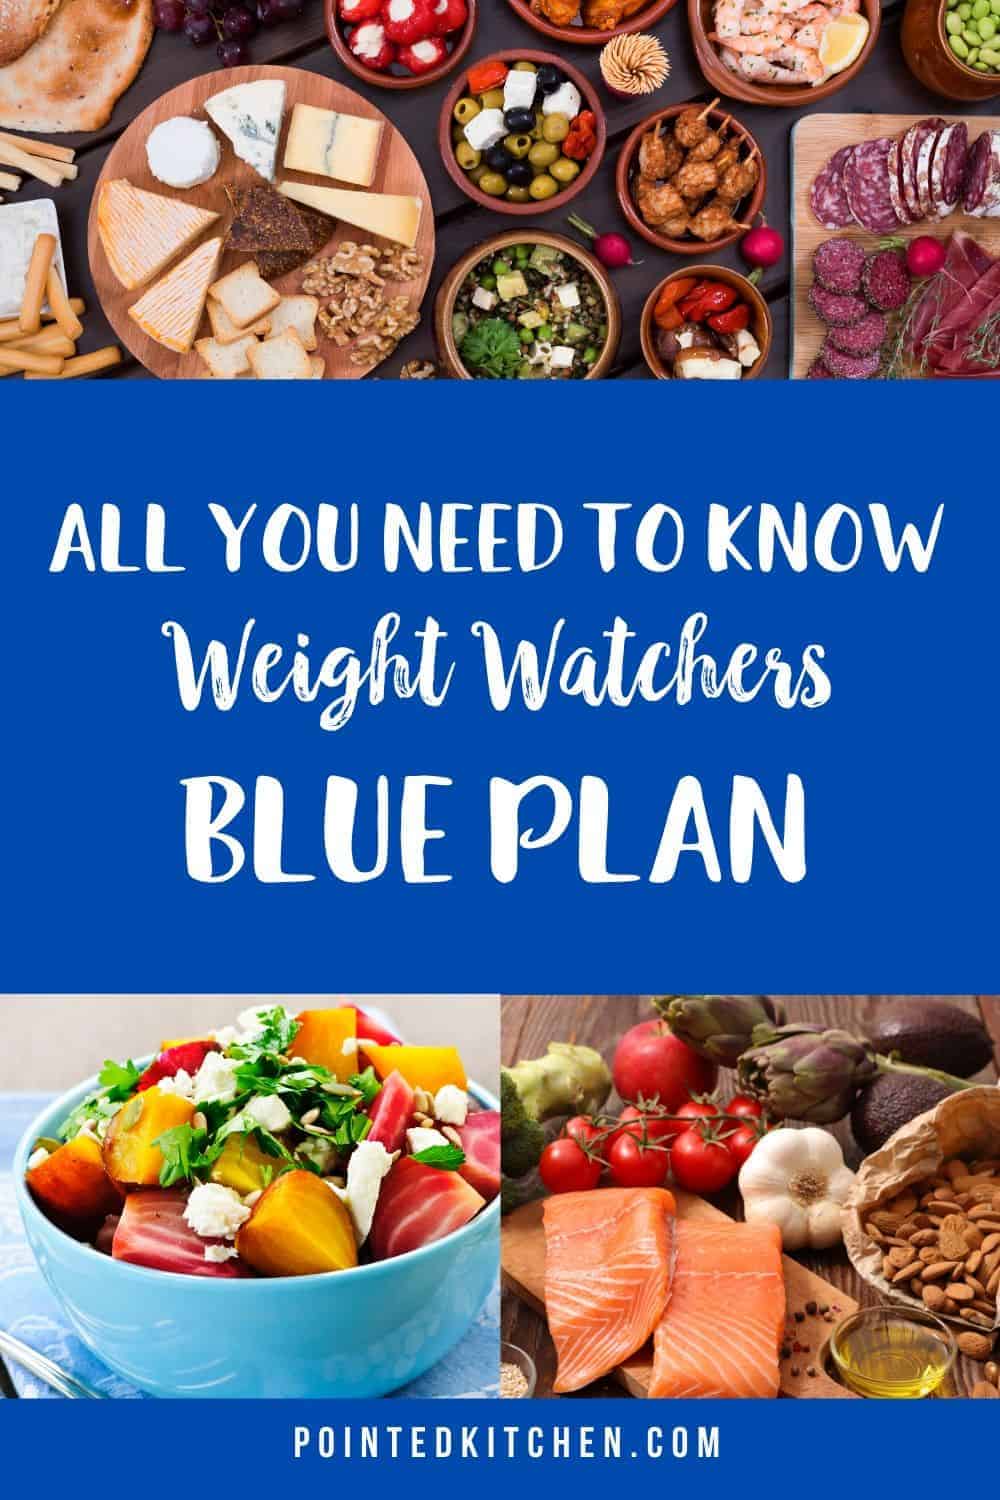 Weight Watchers Blue Plan Recipes - Find Vegetarian Recipes